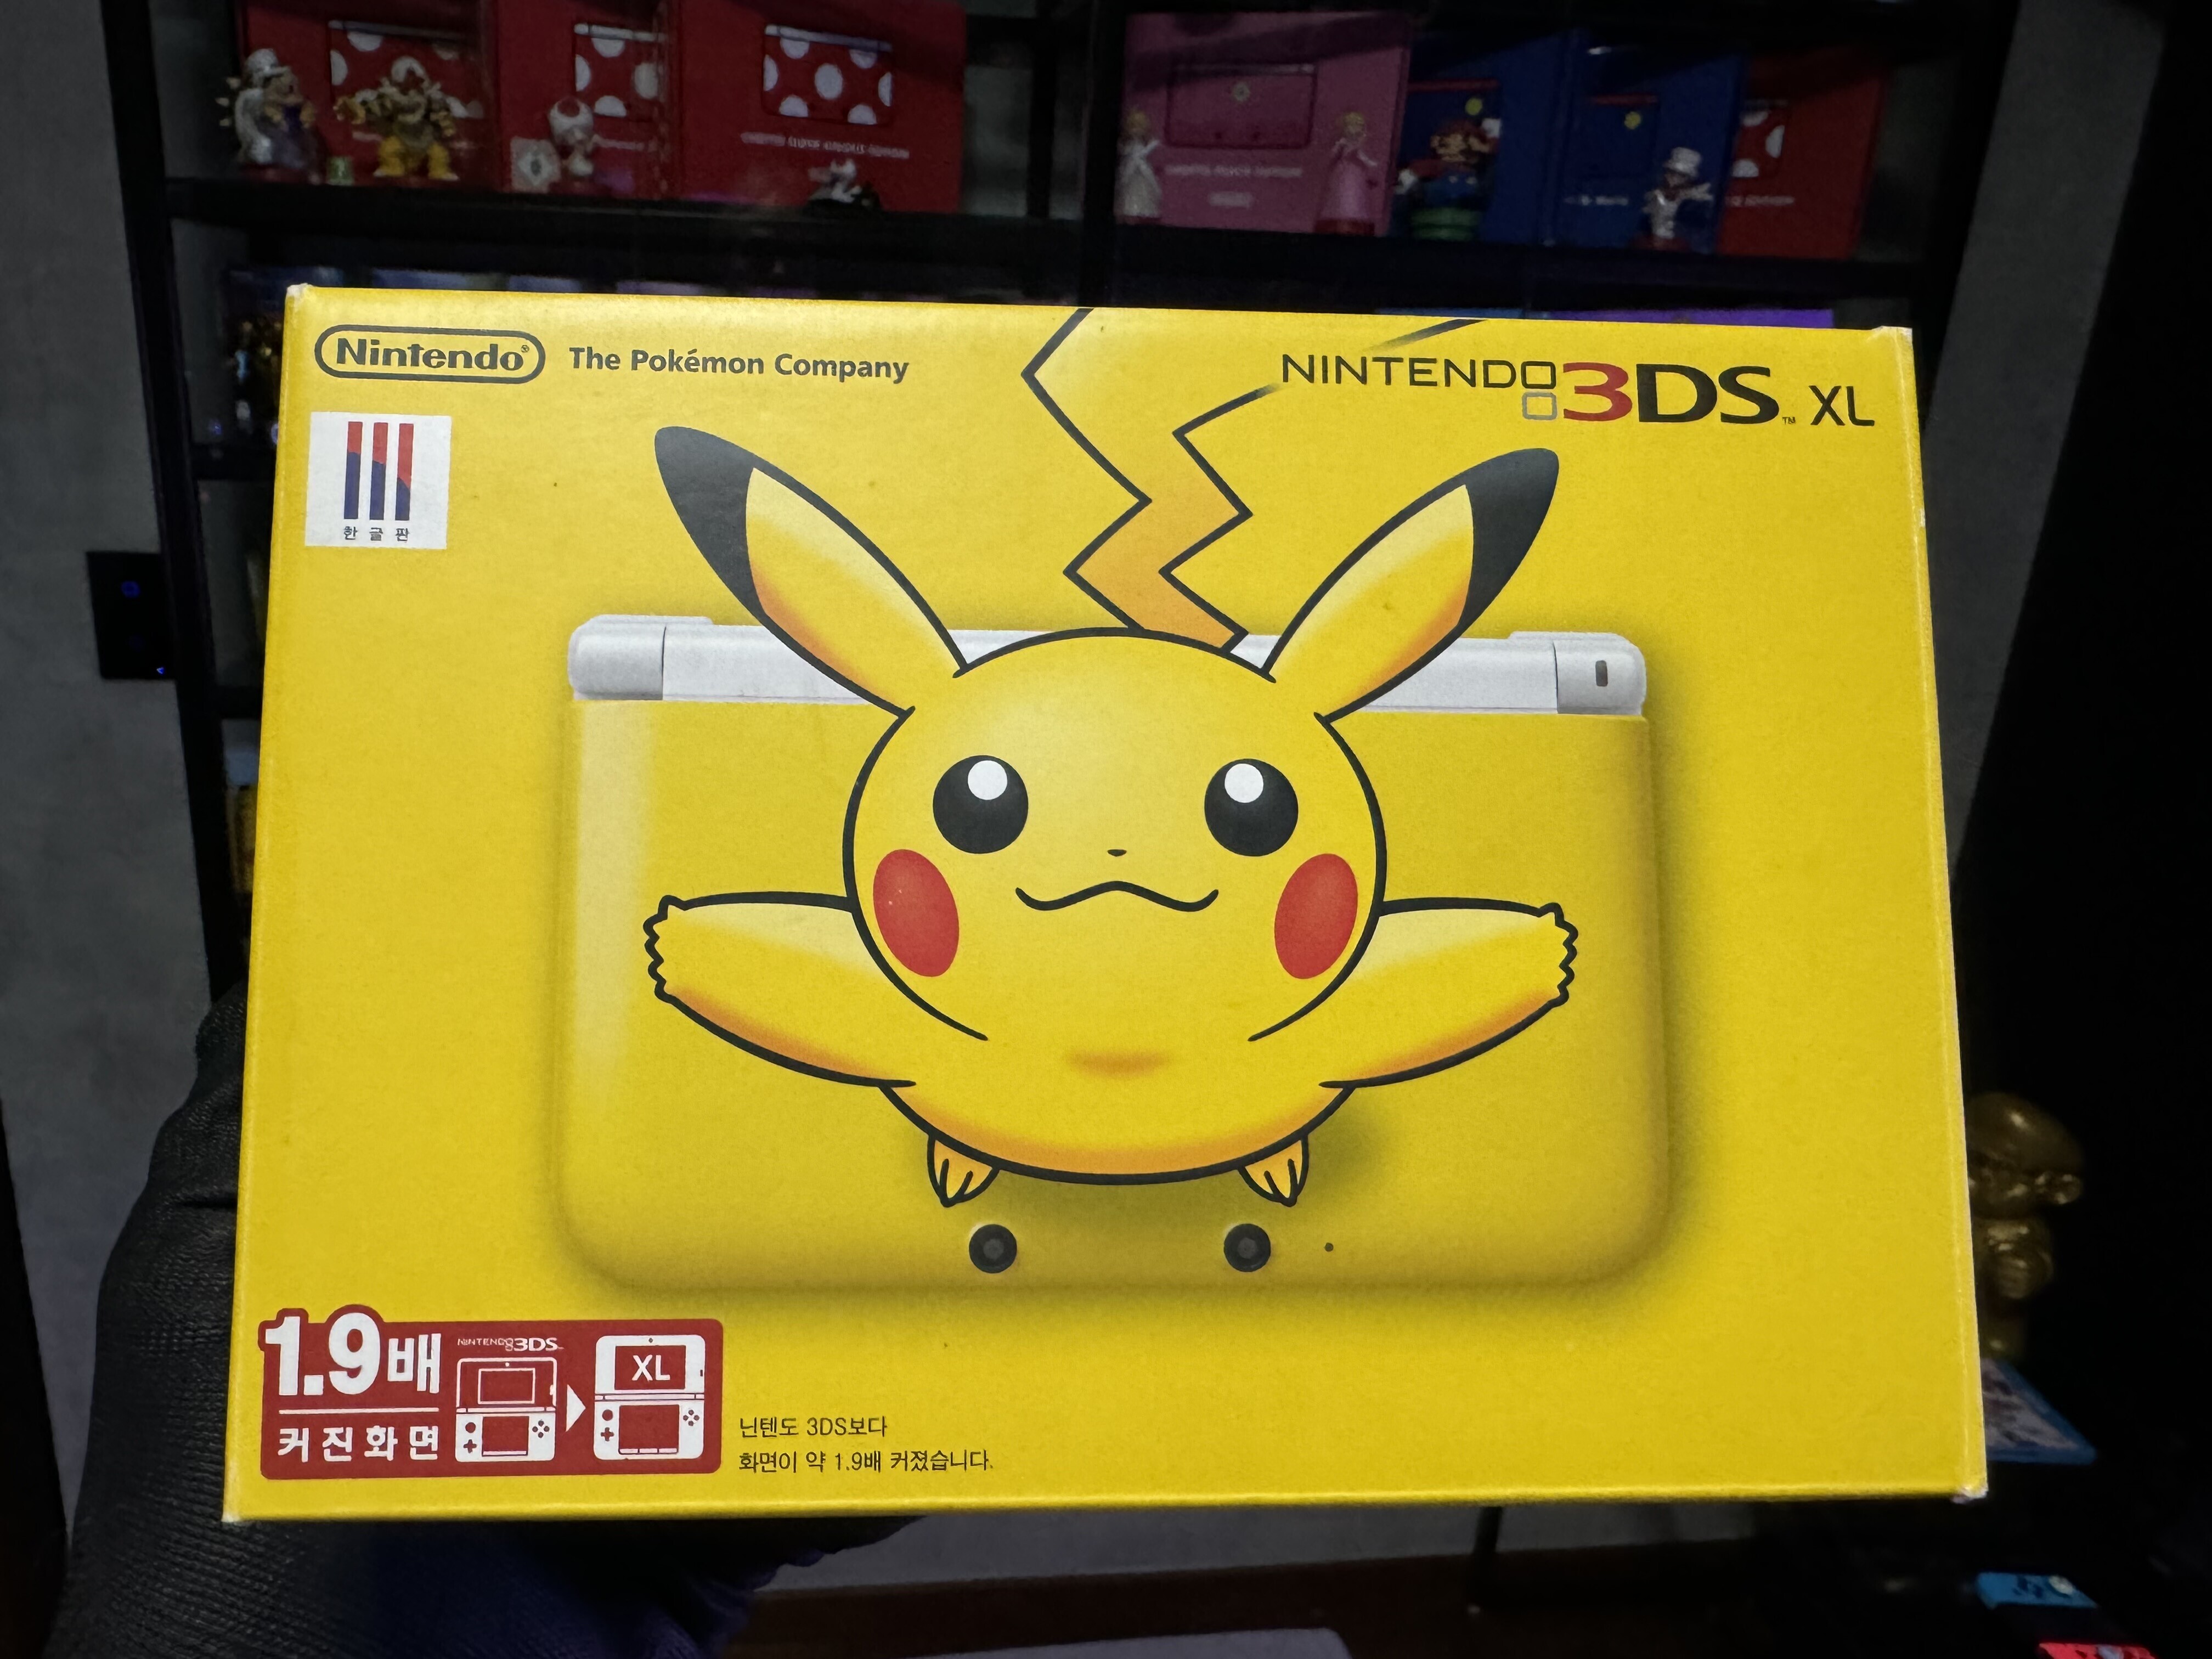  Nintendo 3DS Xl Pikachu Console [KOR]